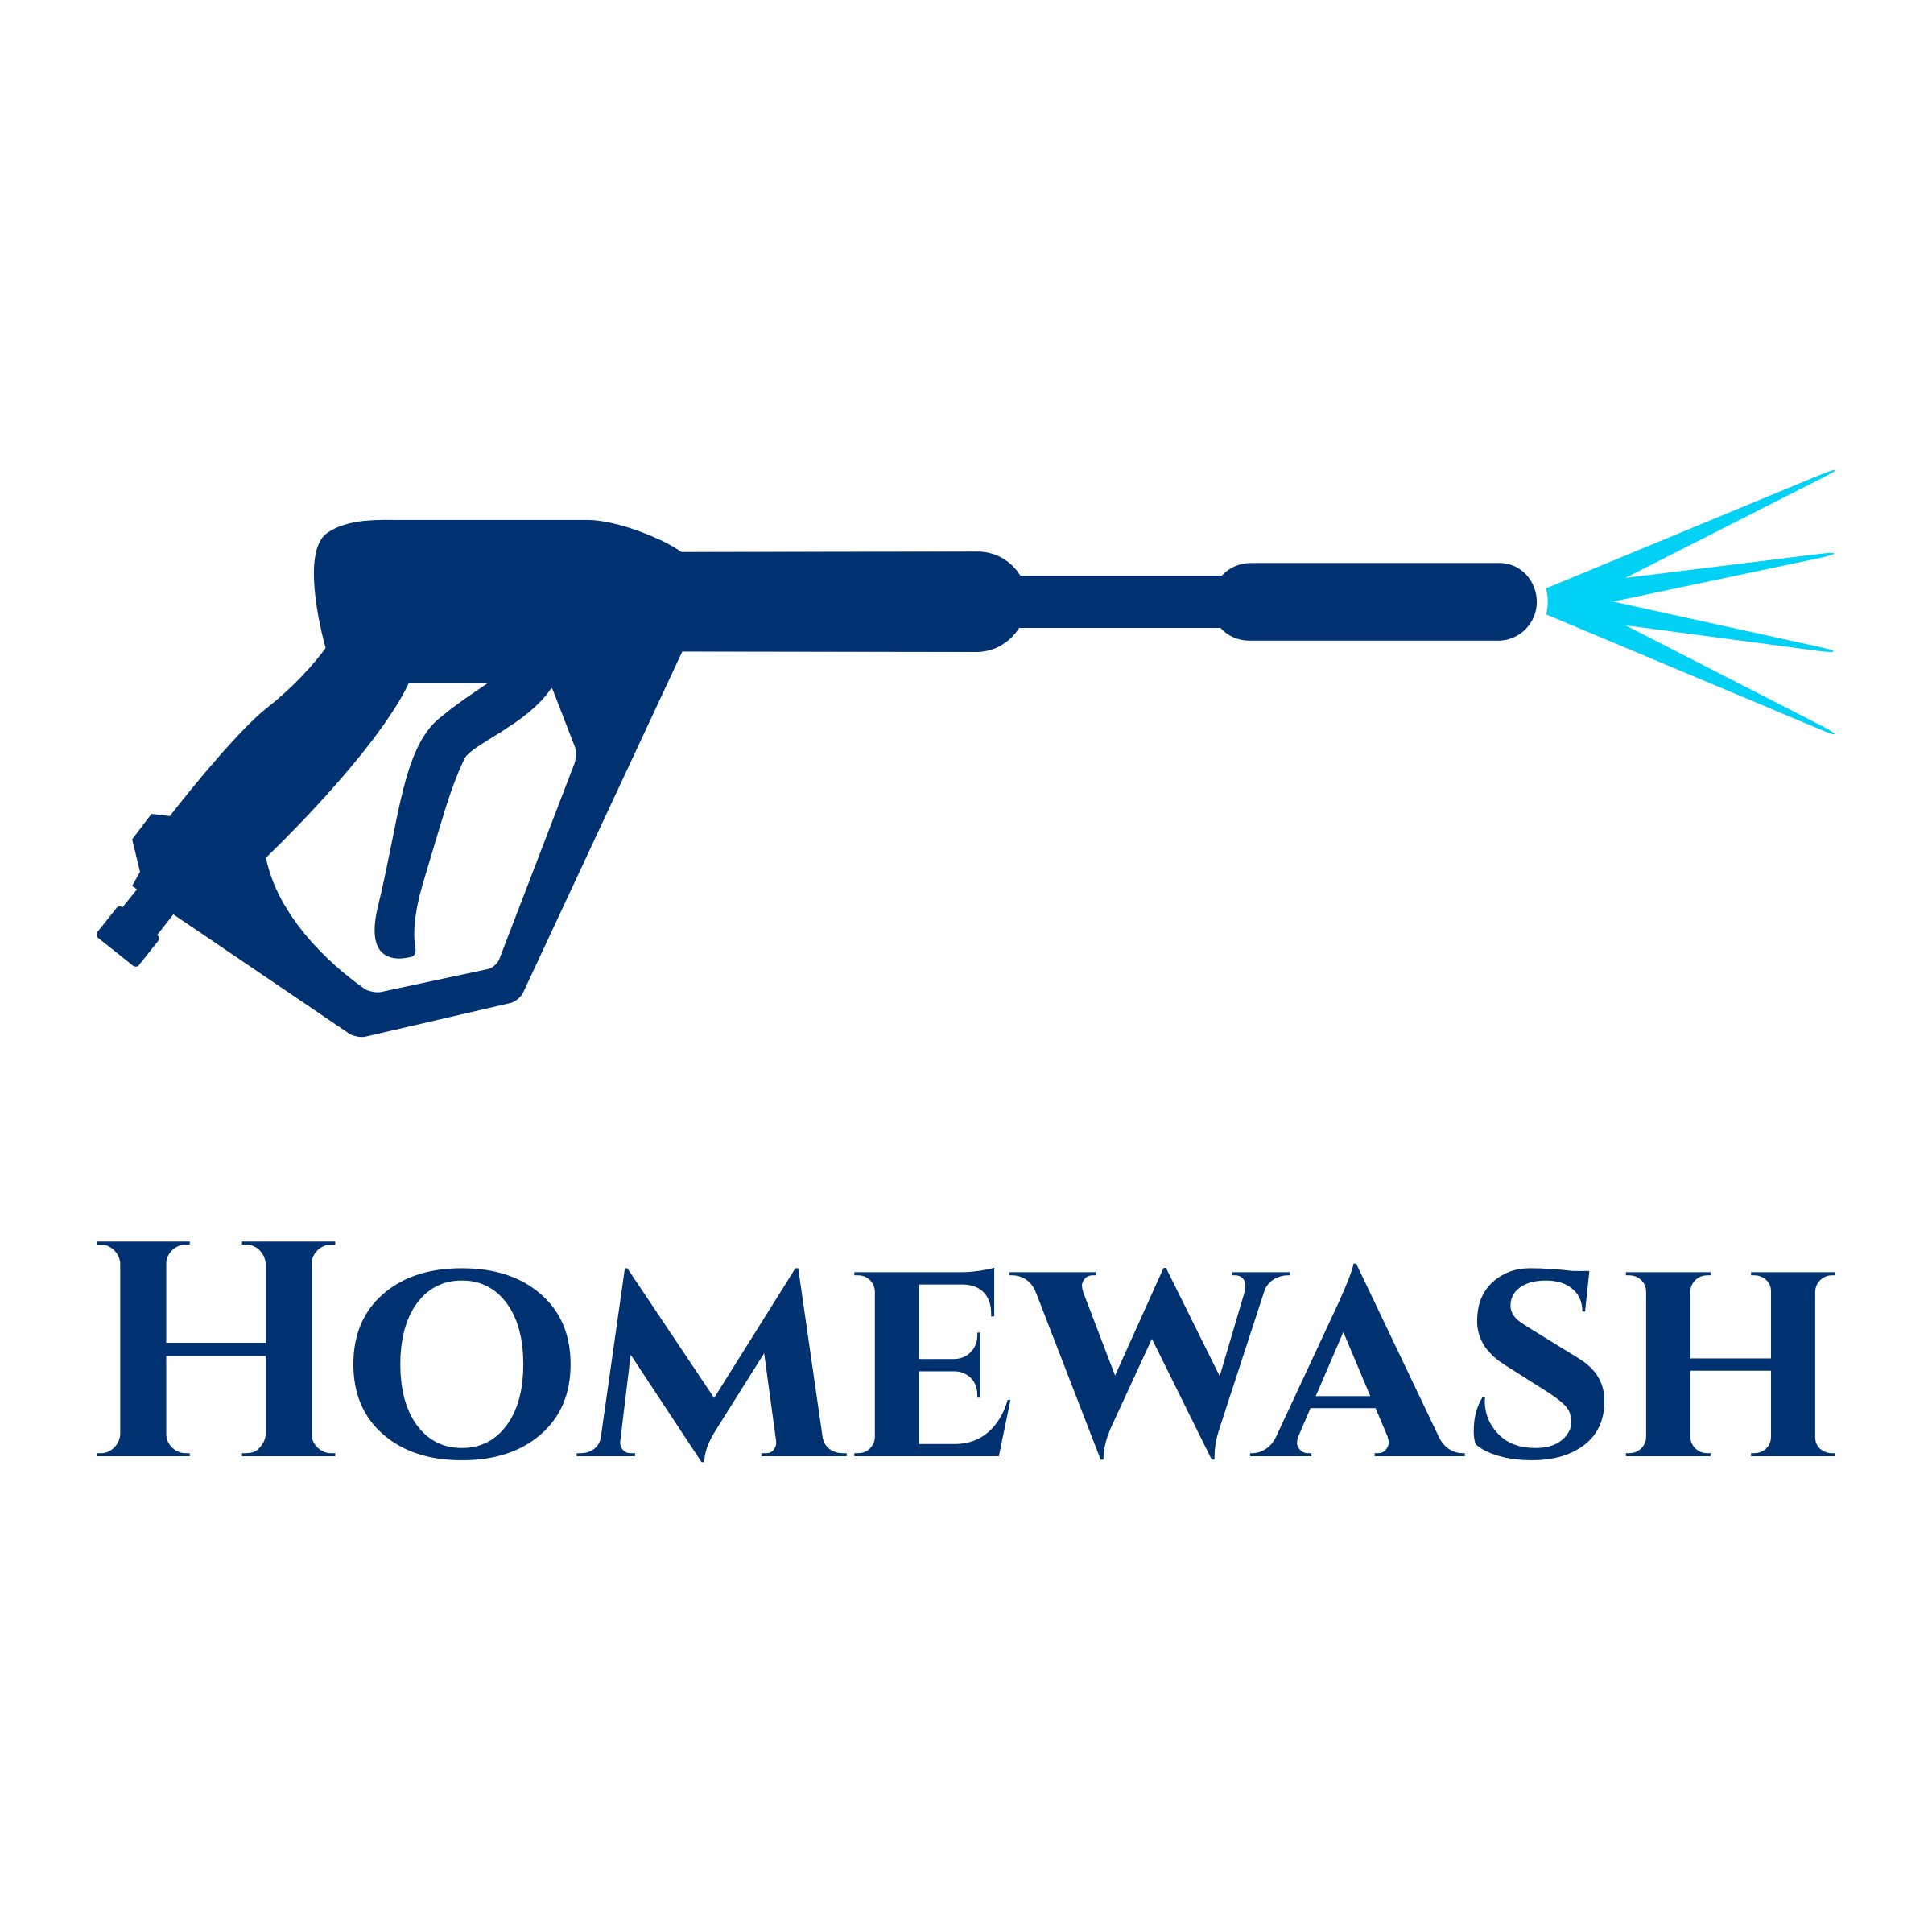 pressure washing car logo